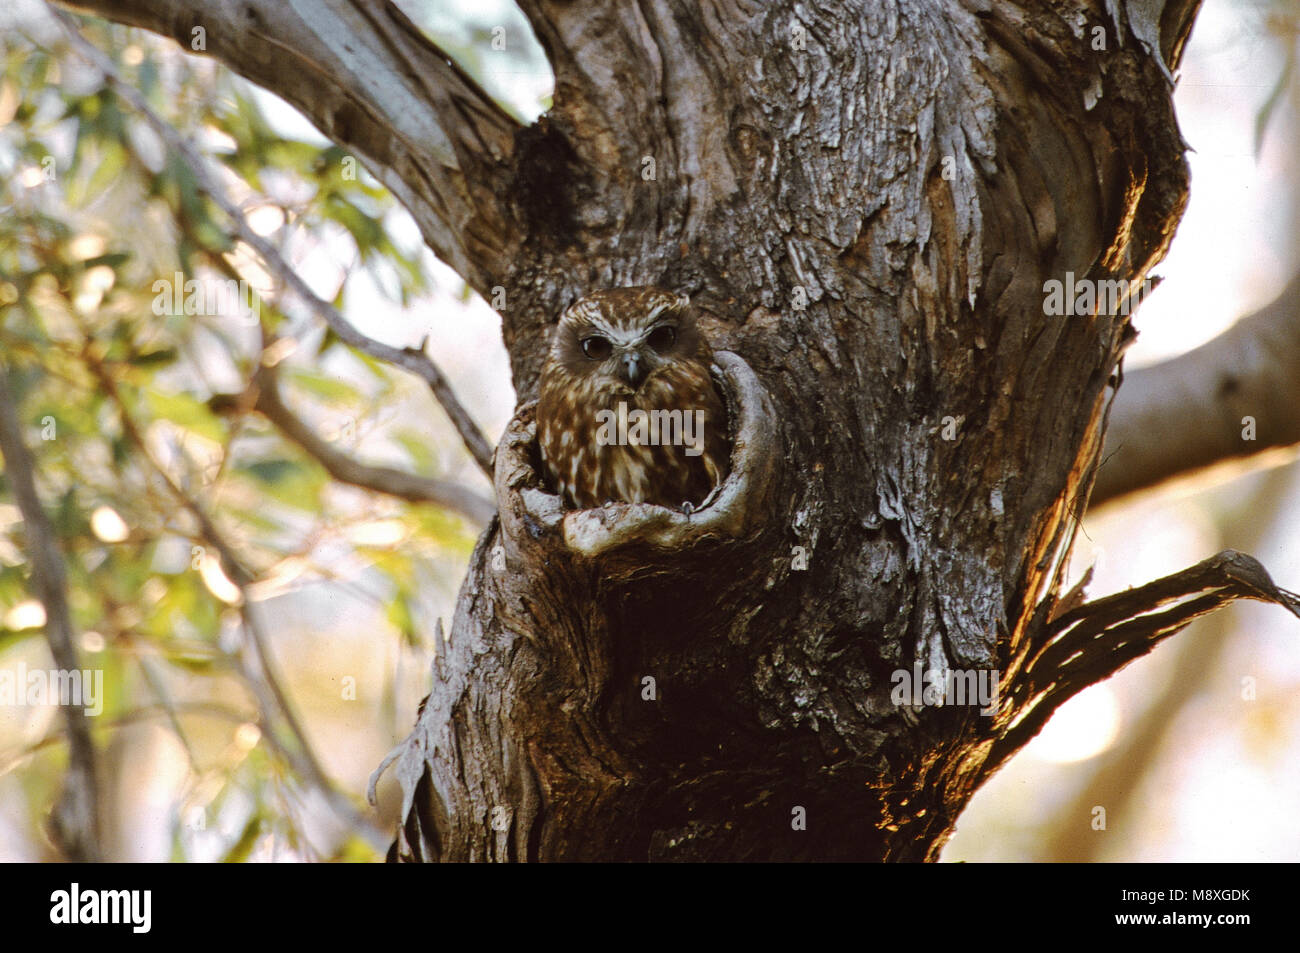 Barking Owl im Loch im Baum; Blafuil in Dragør van een Boom Stockfoto